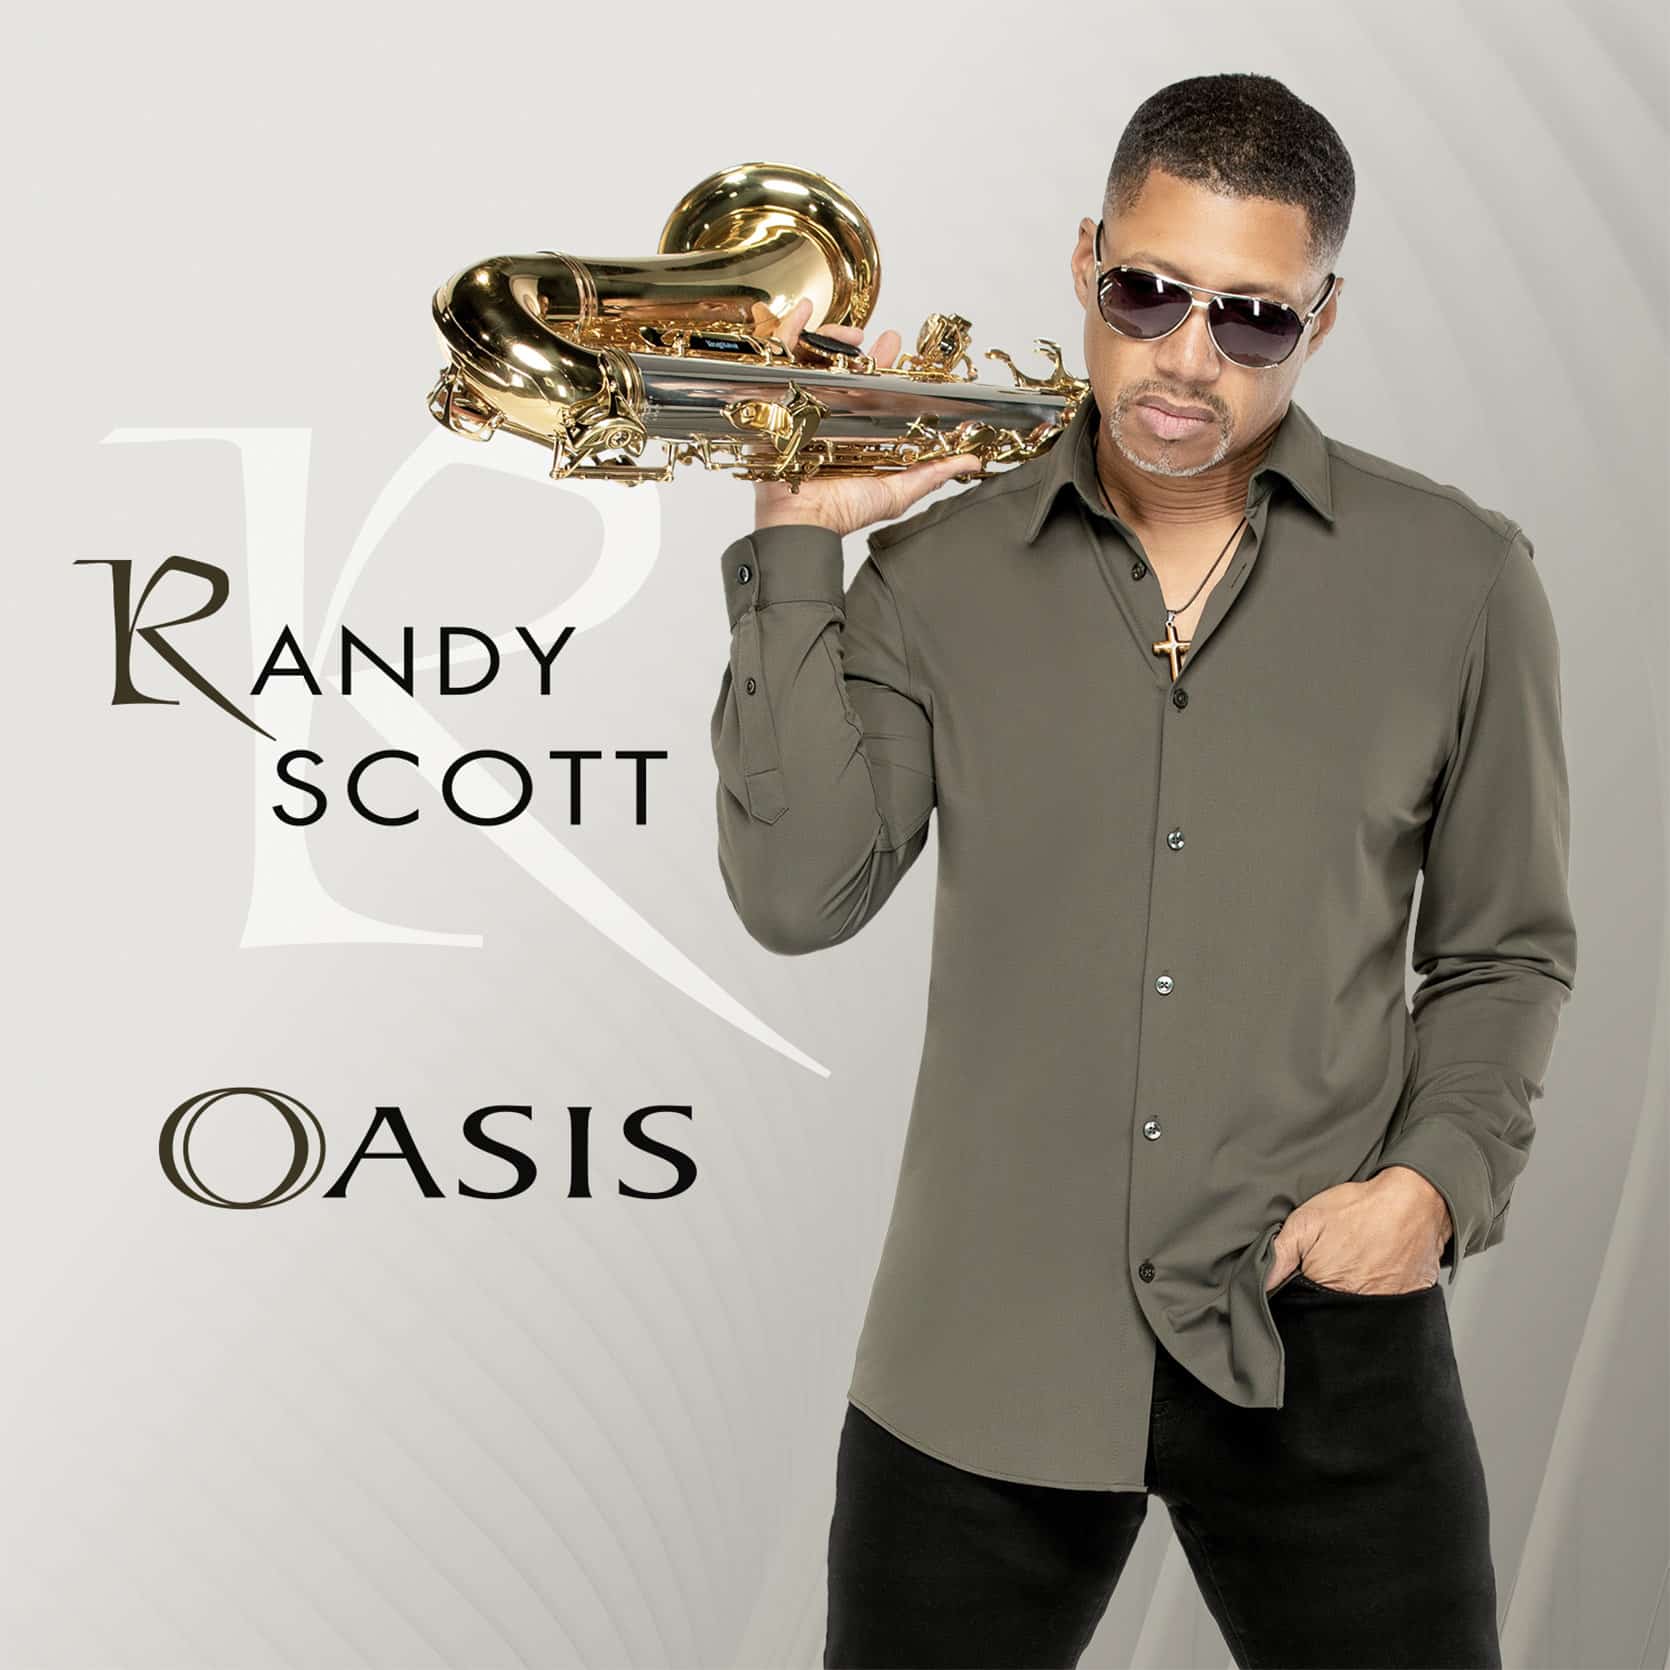 Oasis by Smooth Jazz recording artist Randy Scott